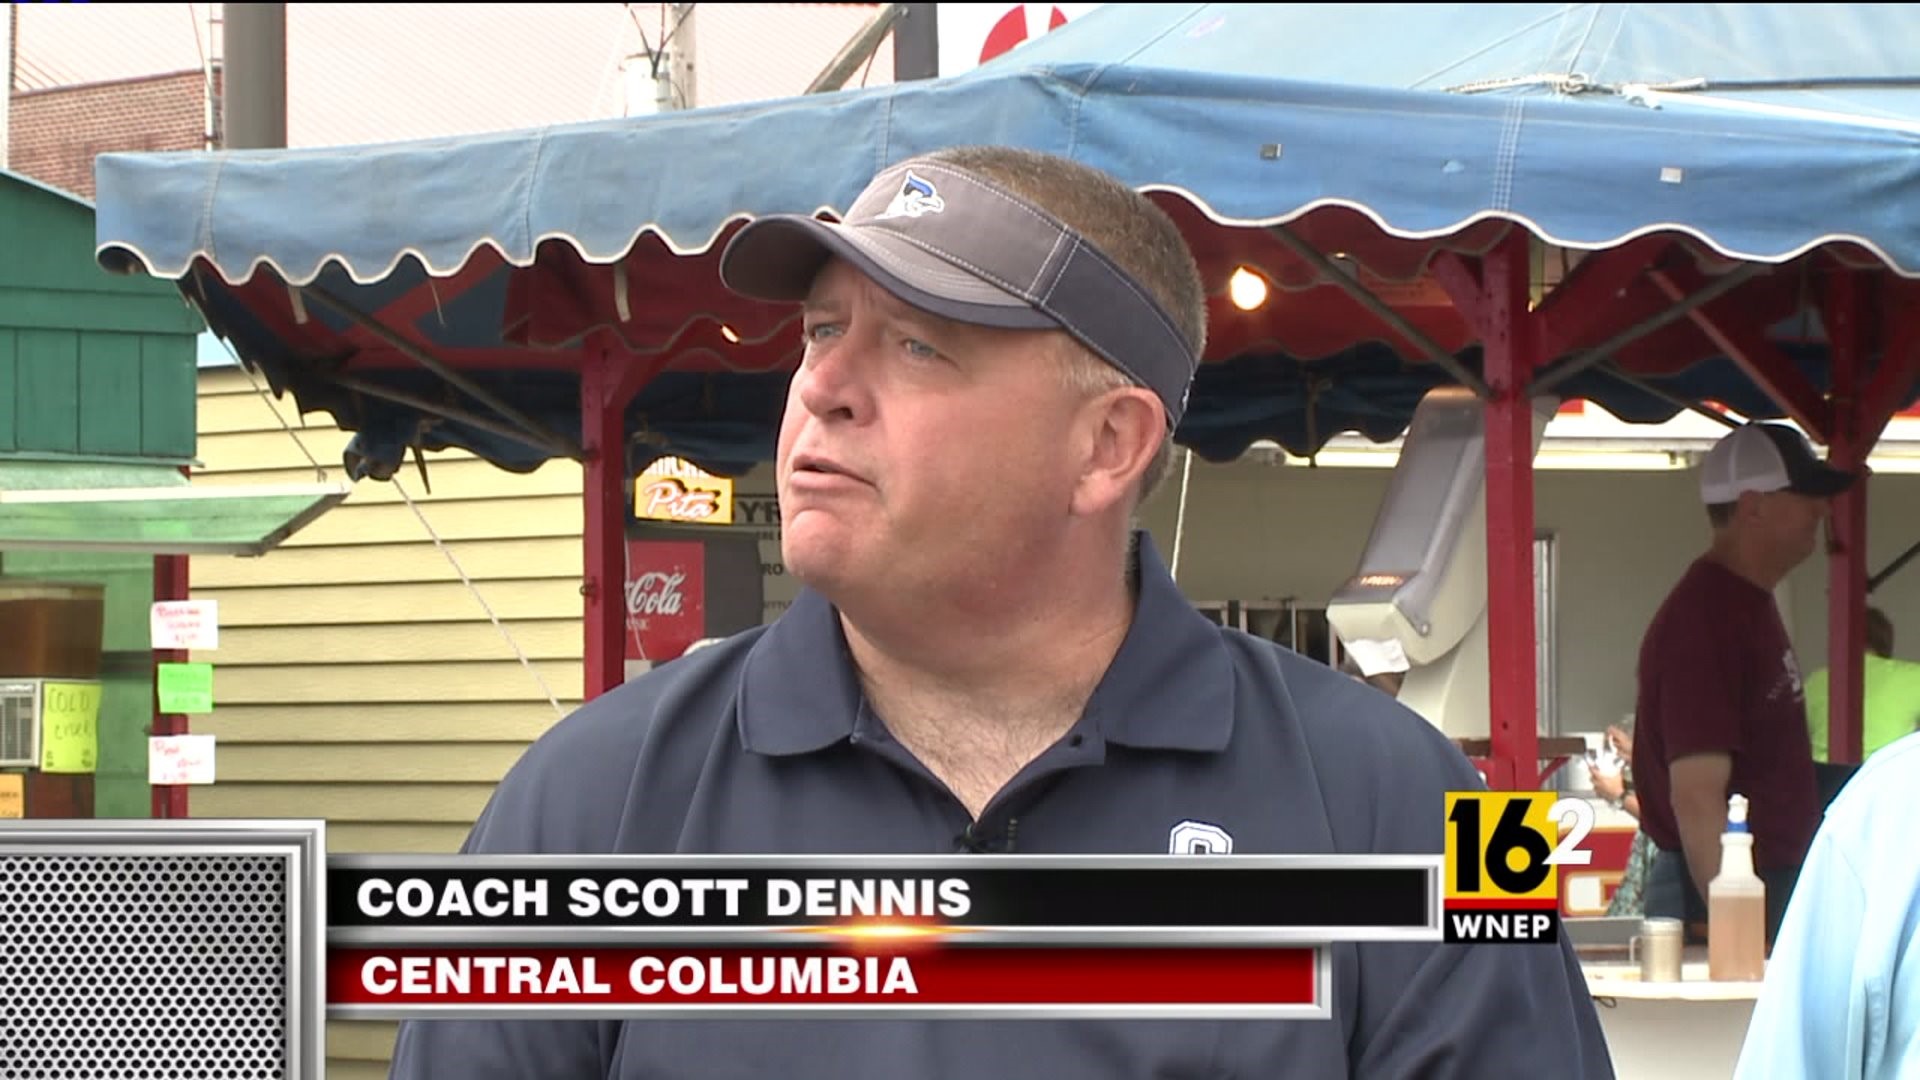 Central Columbia Head Coach Scott Dennis